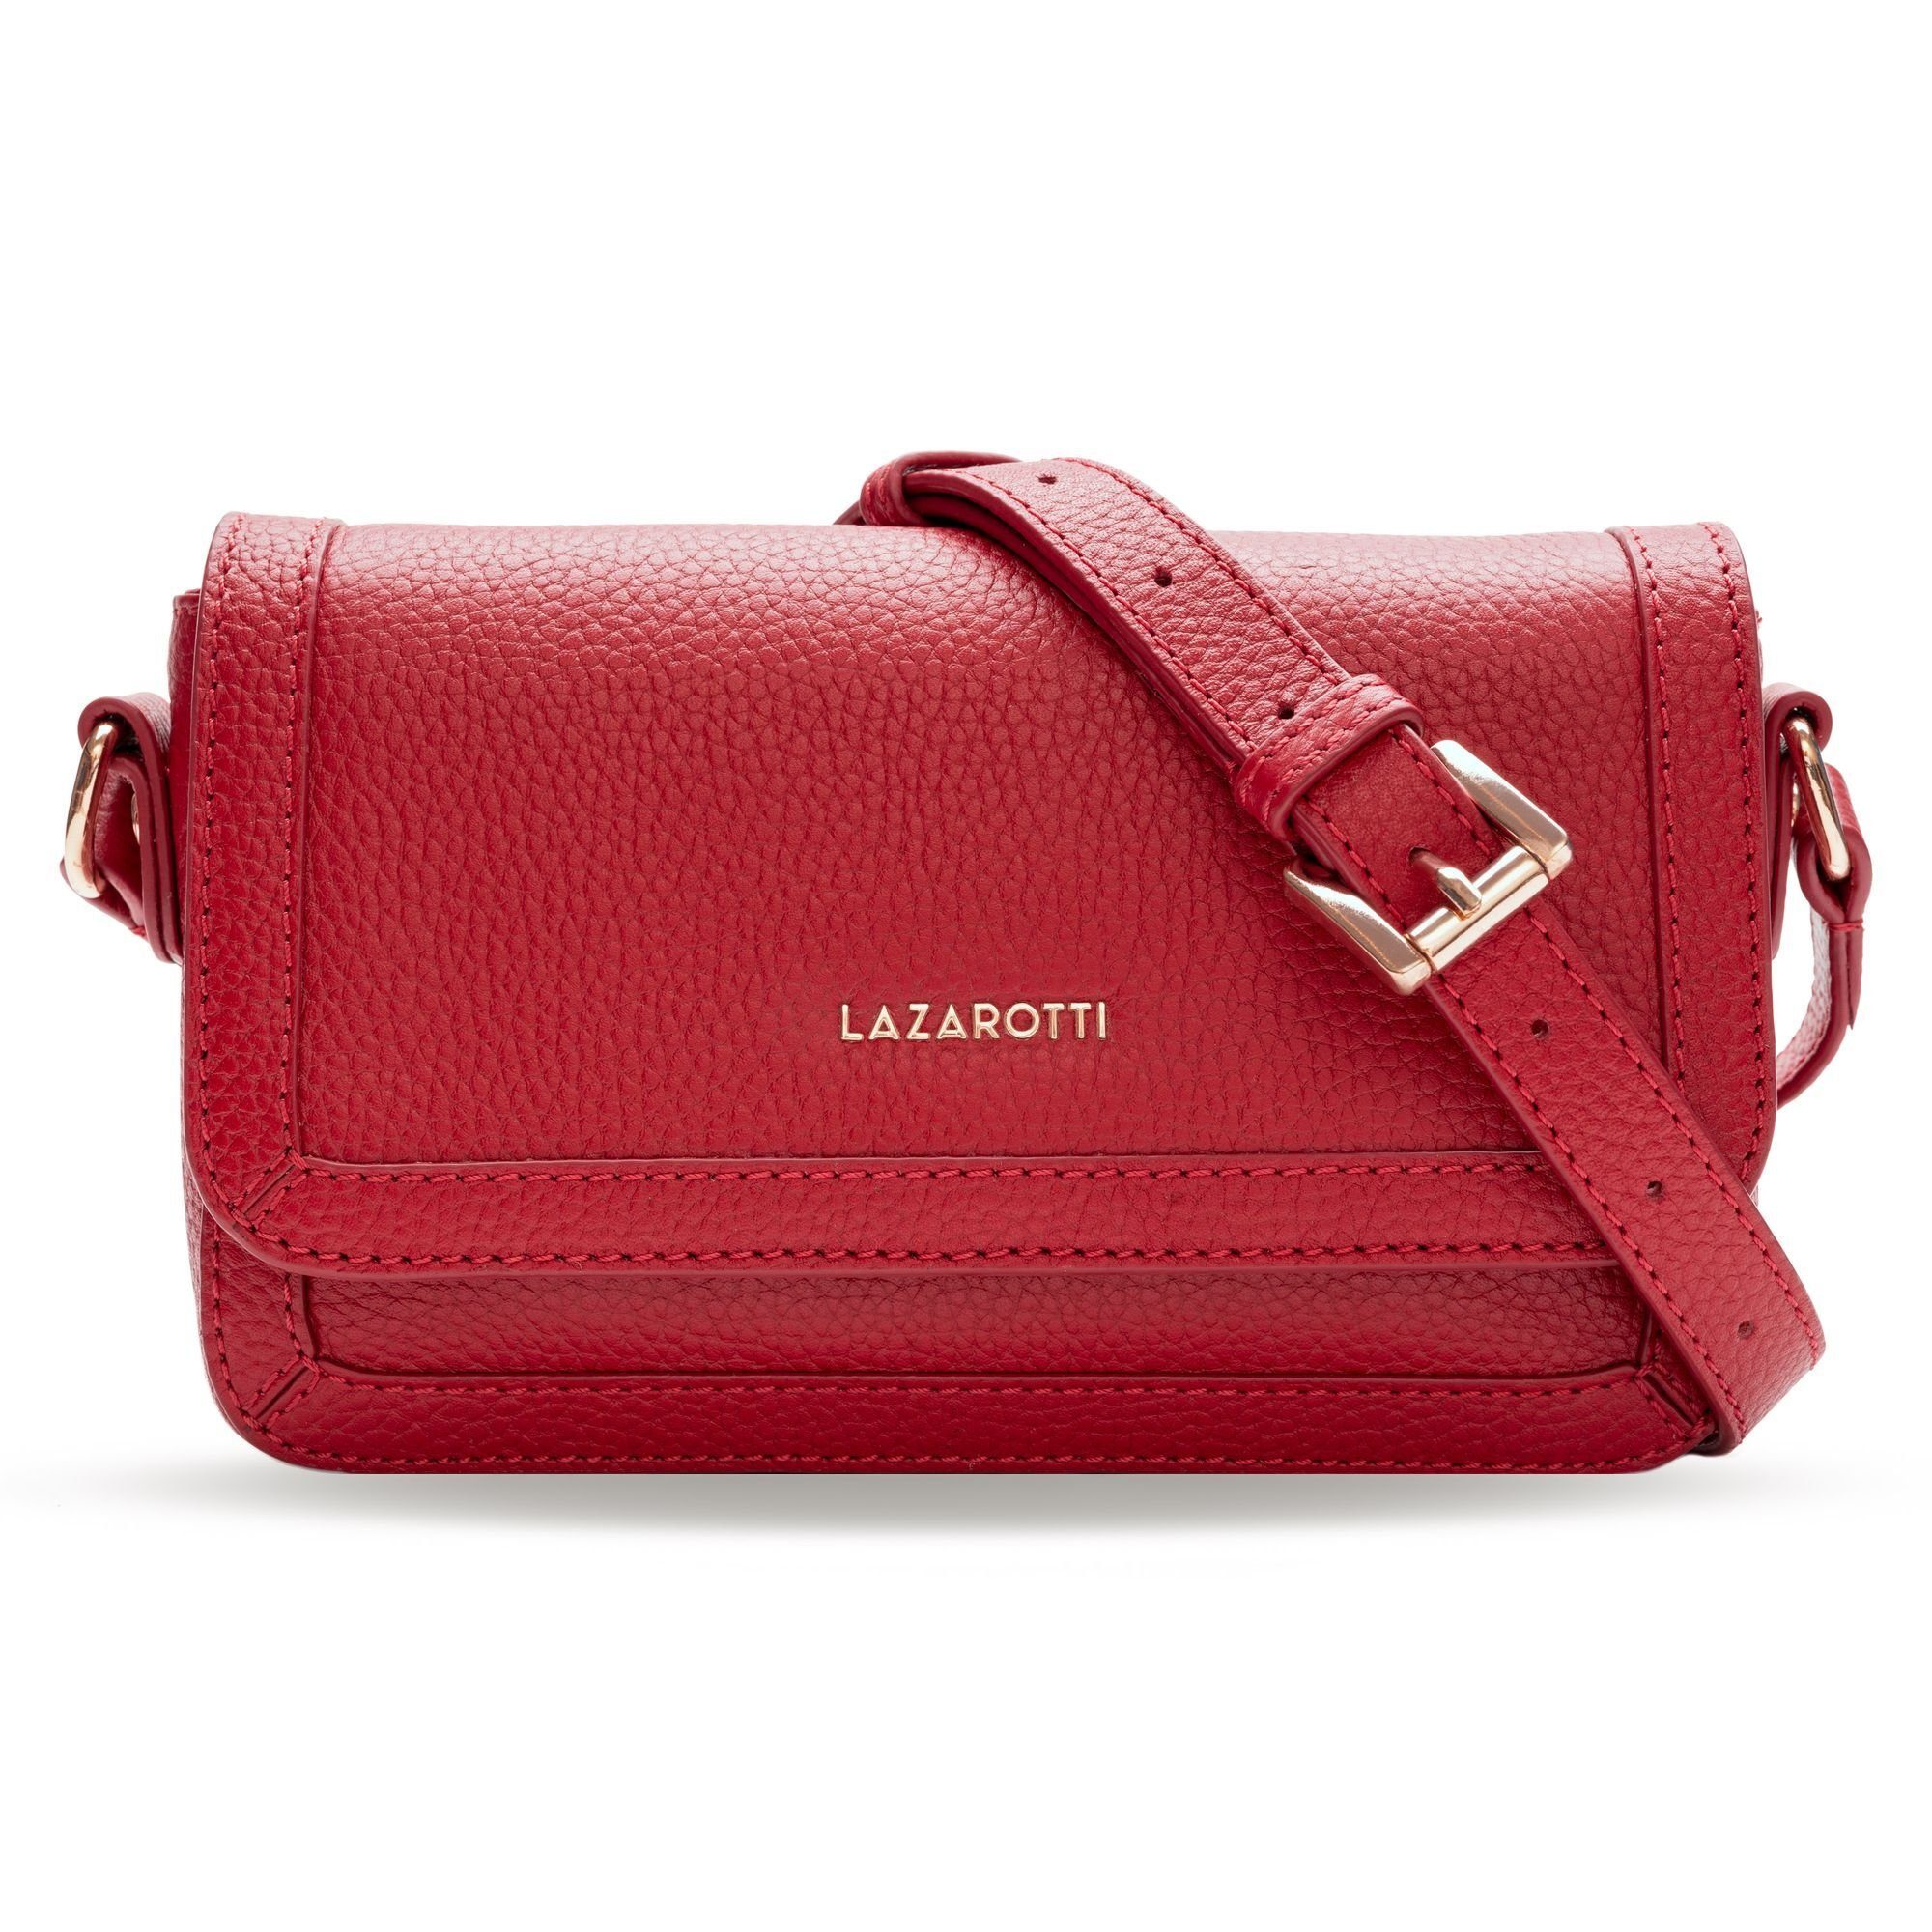 Leather, Umhängetasche Lazarotti Leder red Bologna